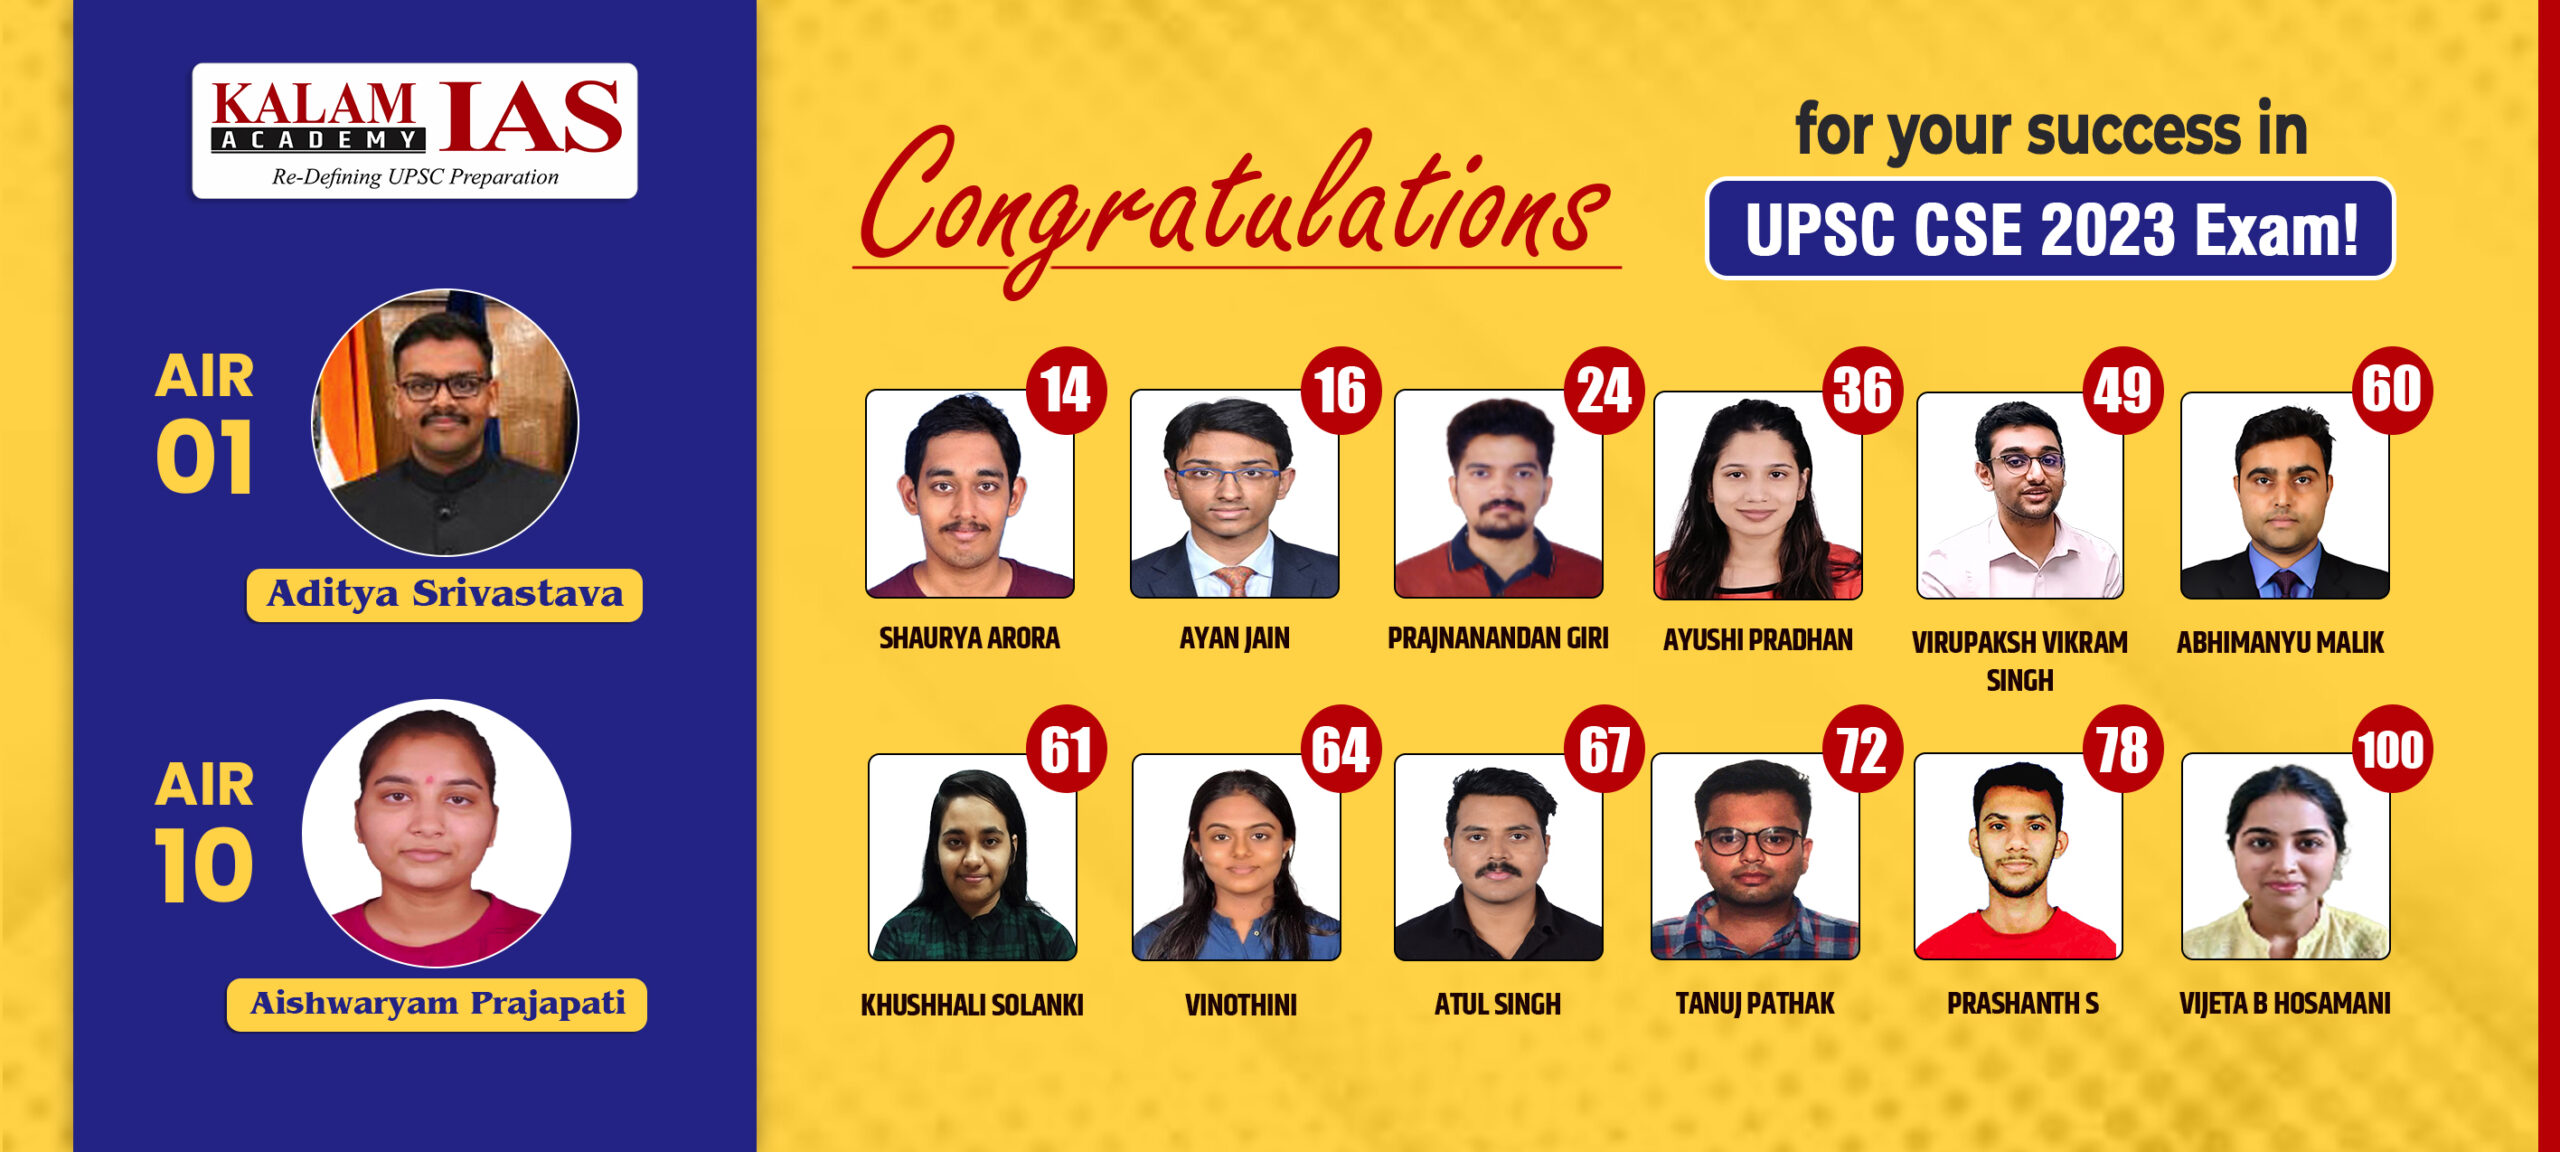 UPSC CSE Result 2023 | Kalam IAS Top 100 Result